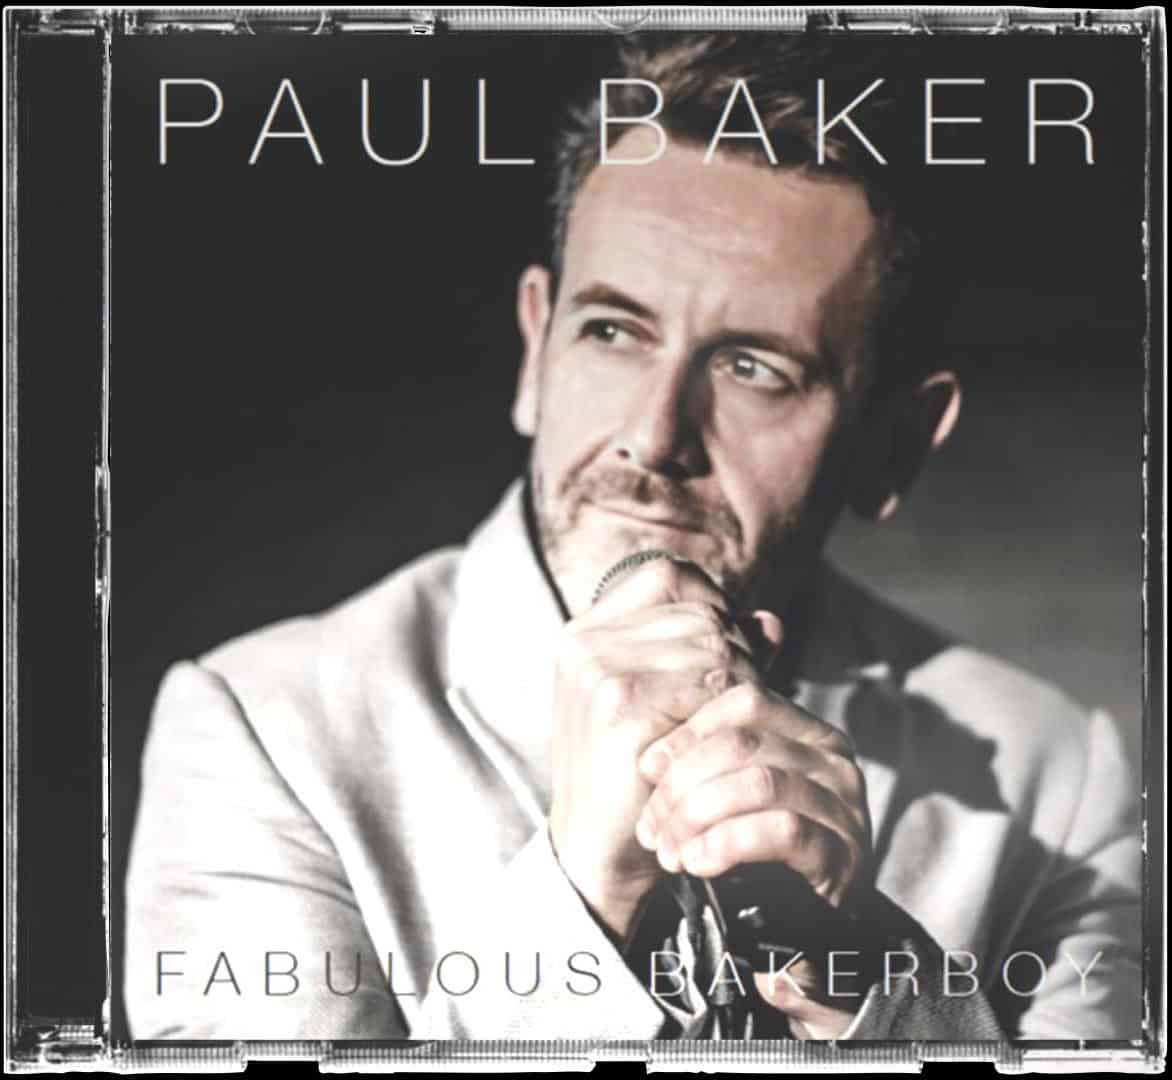 VISIT PAUL BAKER ONLINE